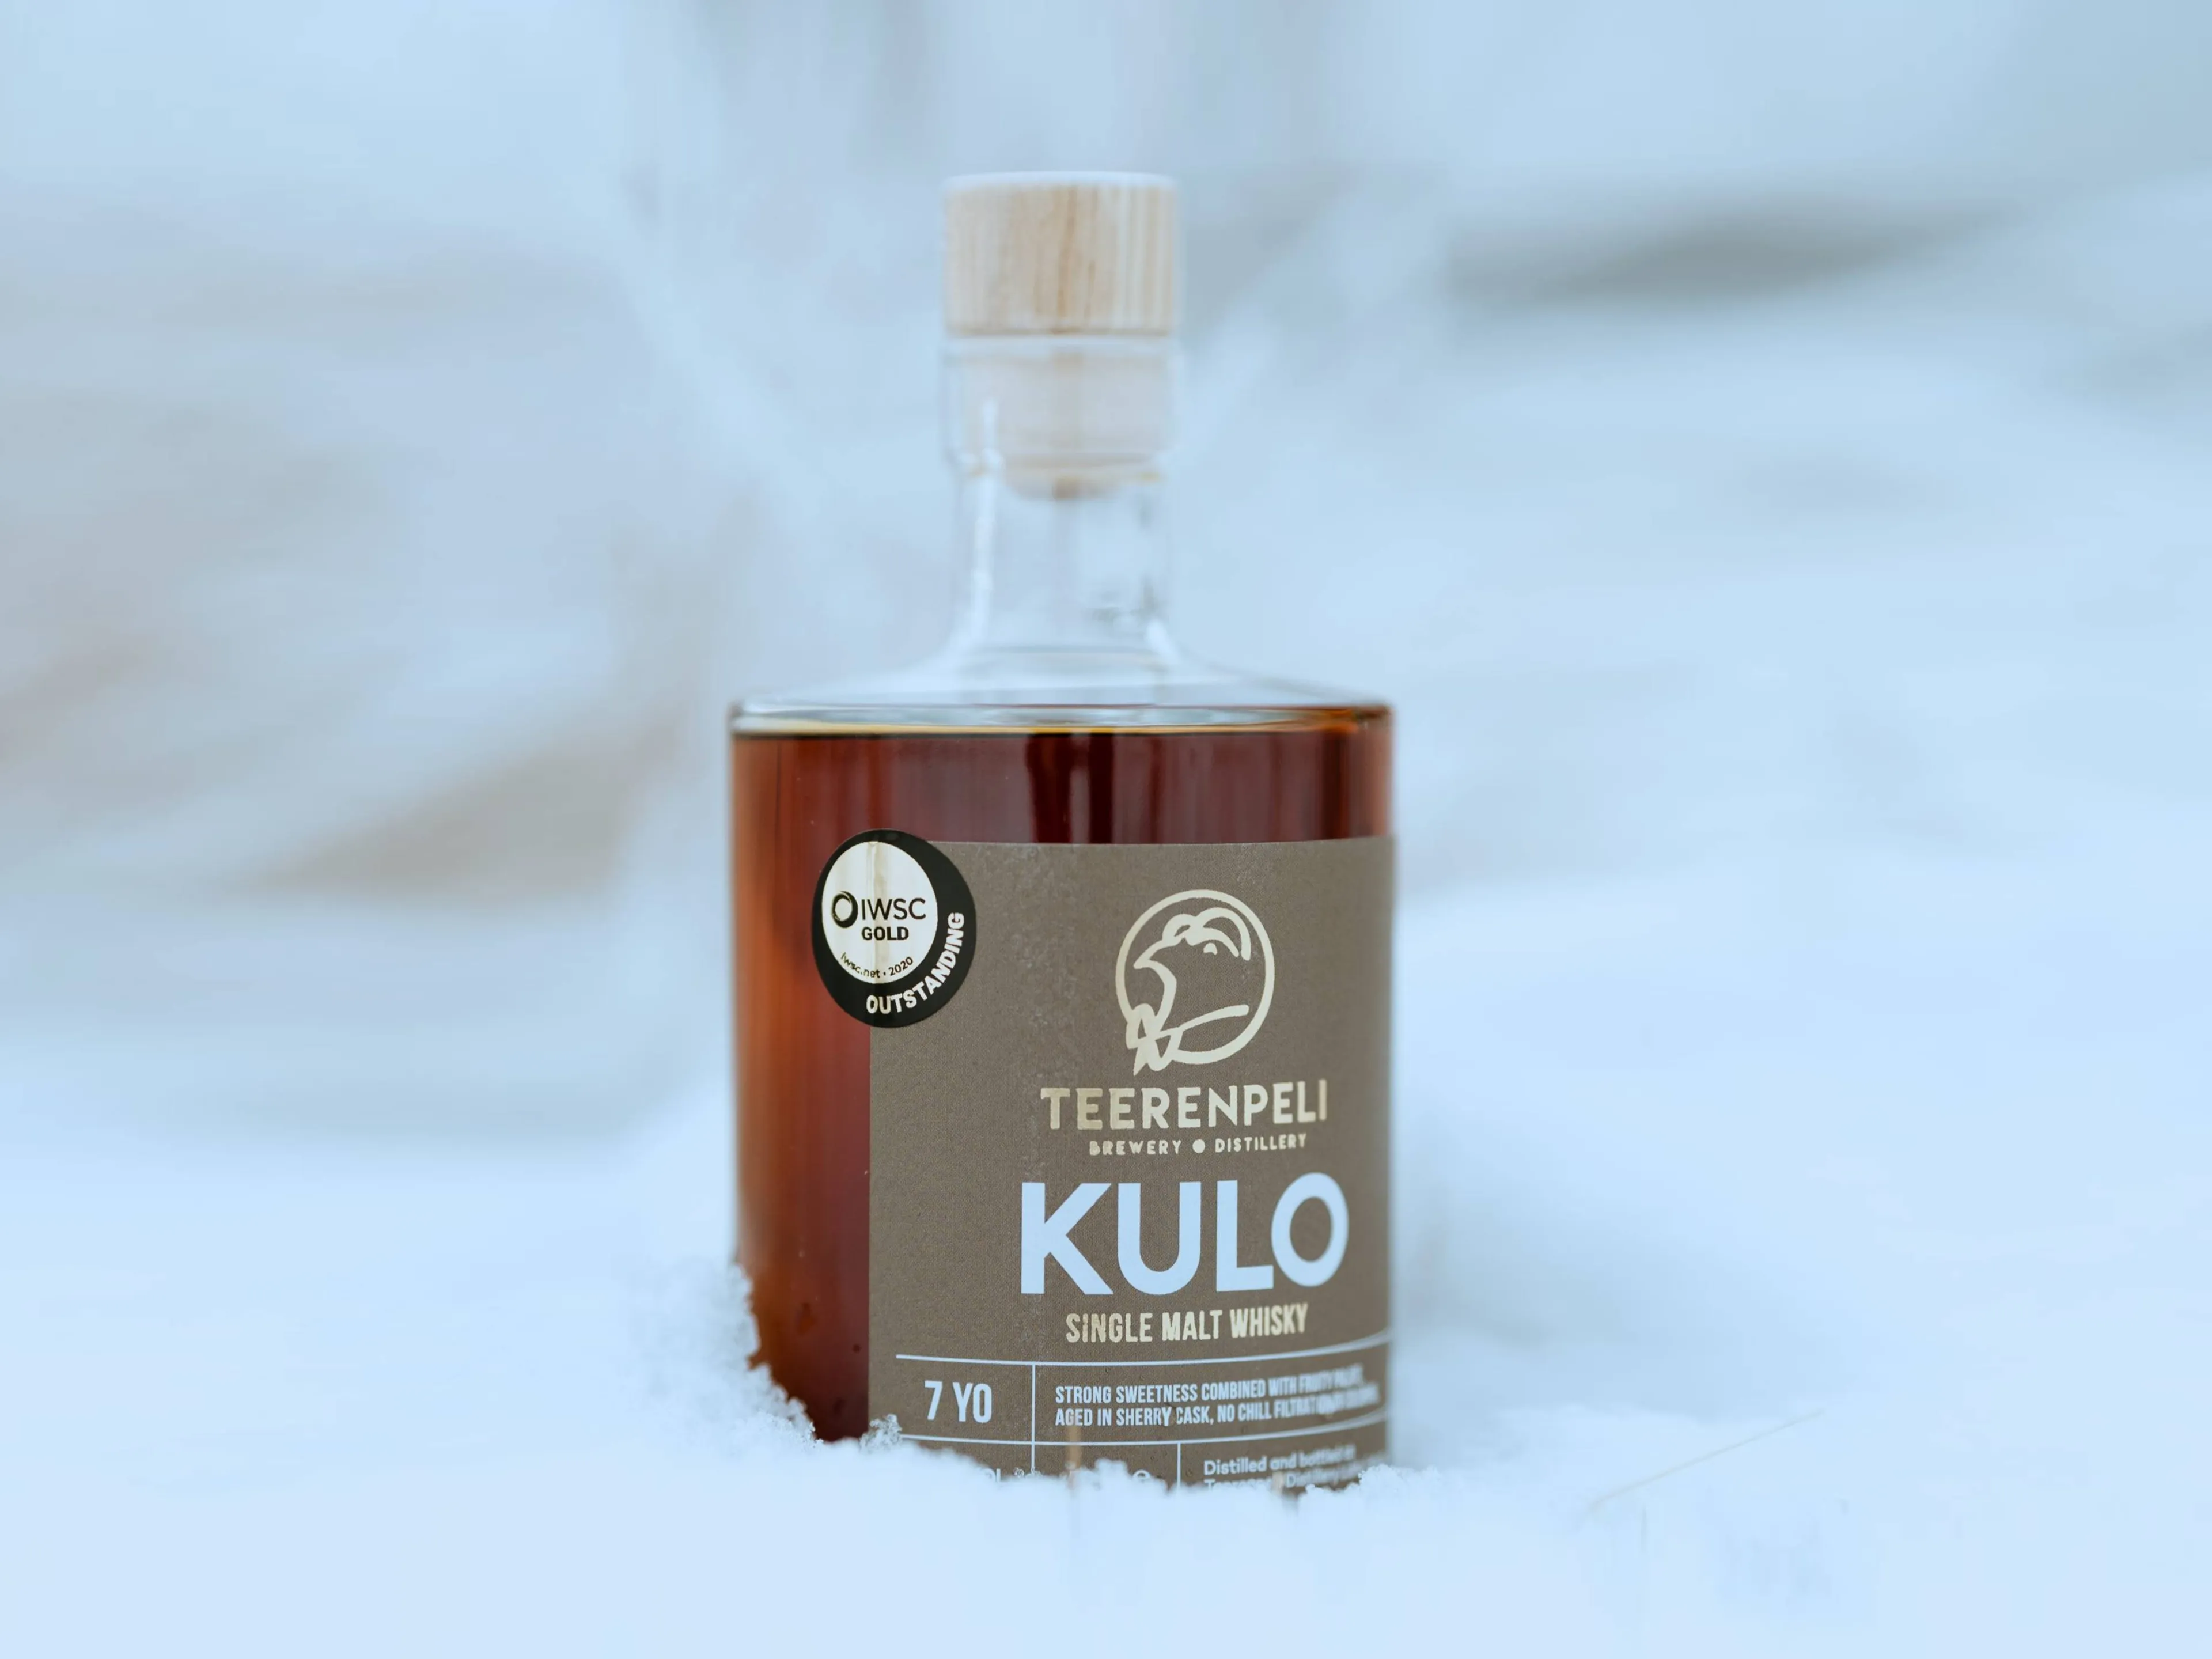 De Finse Teerenpeli Kulo whisky